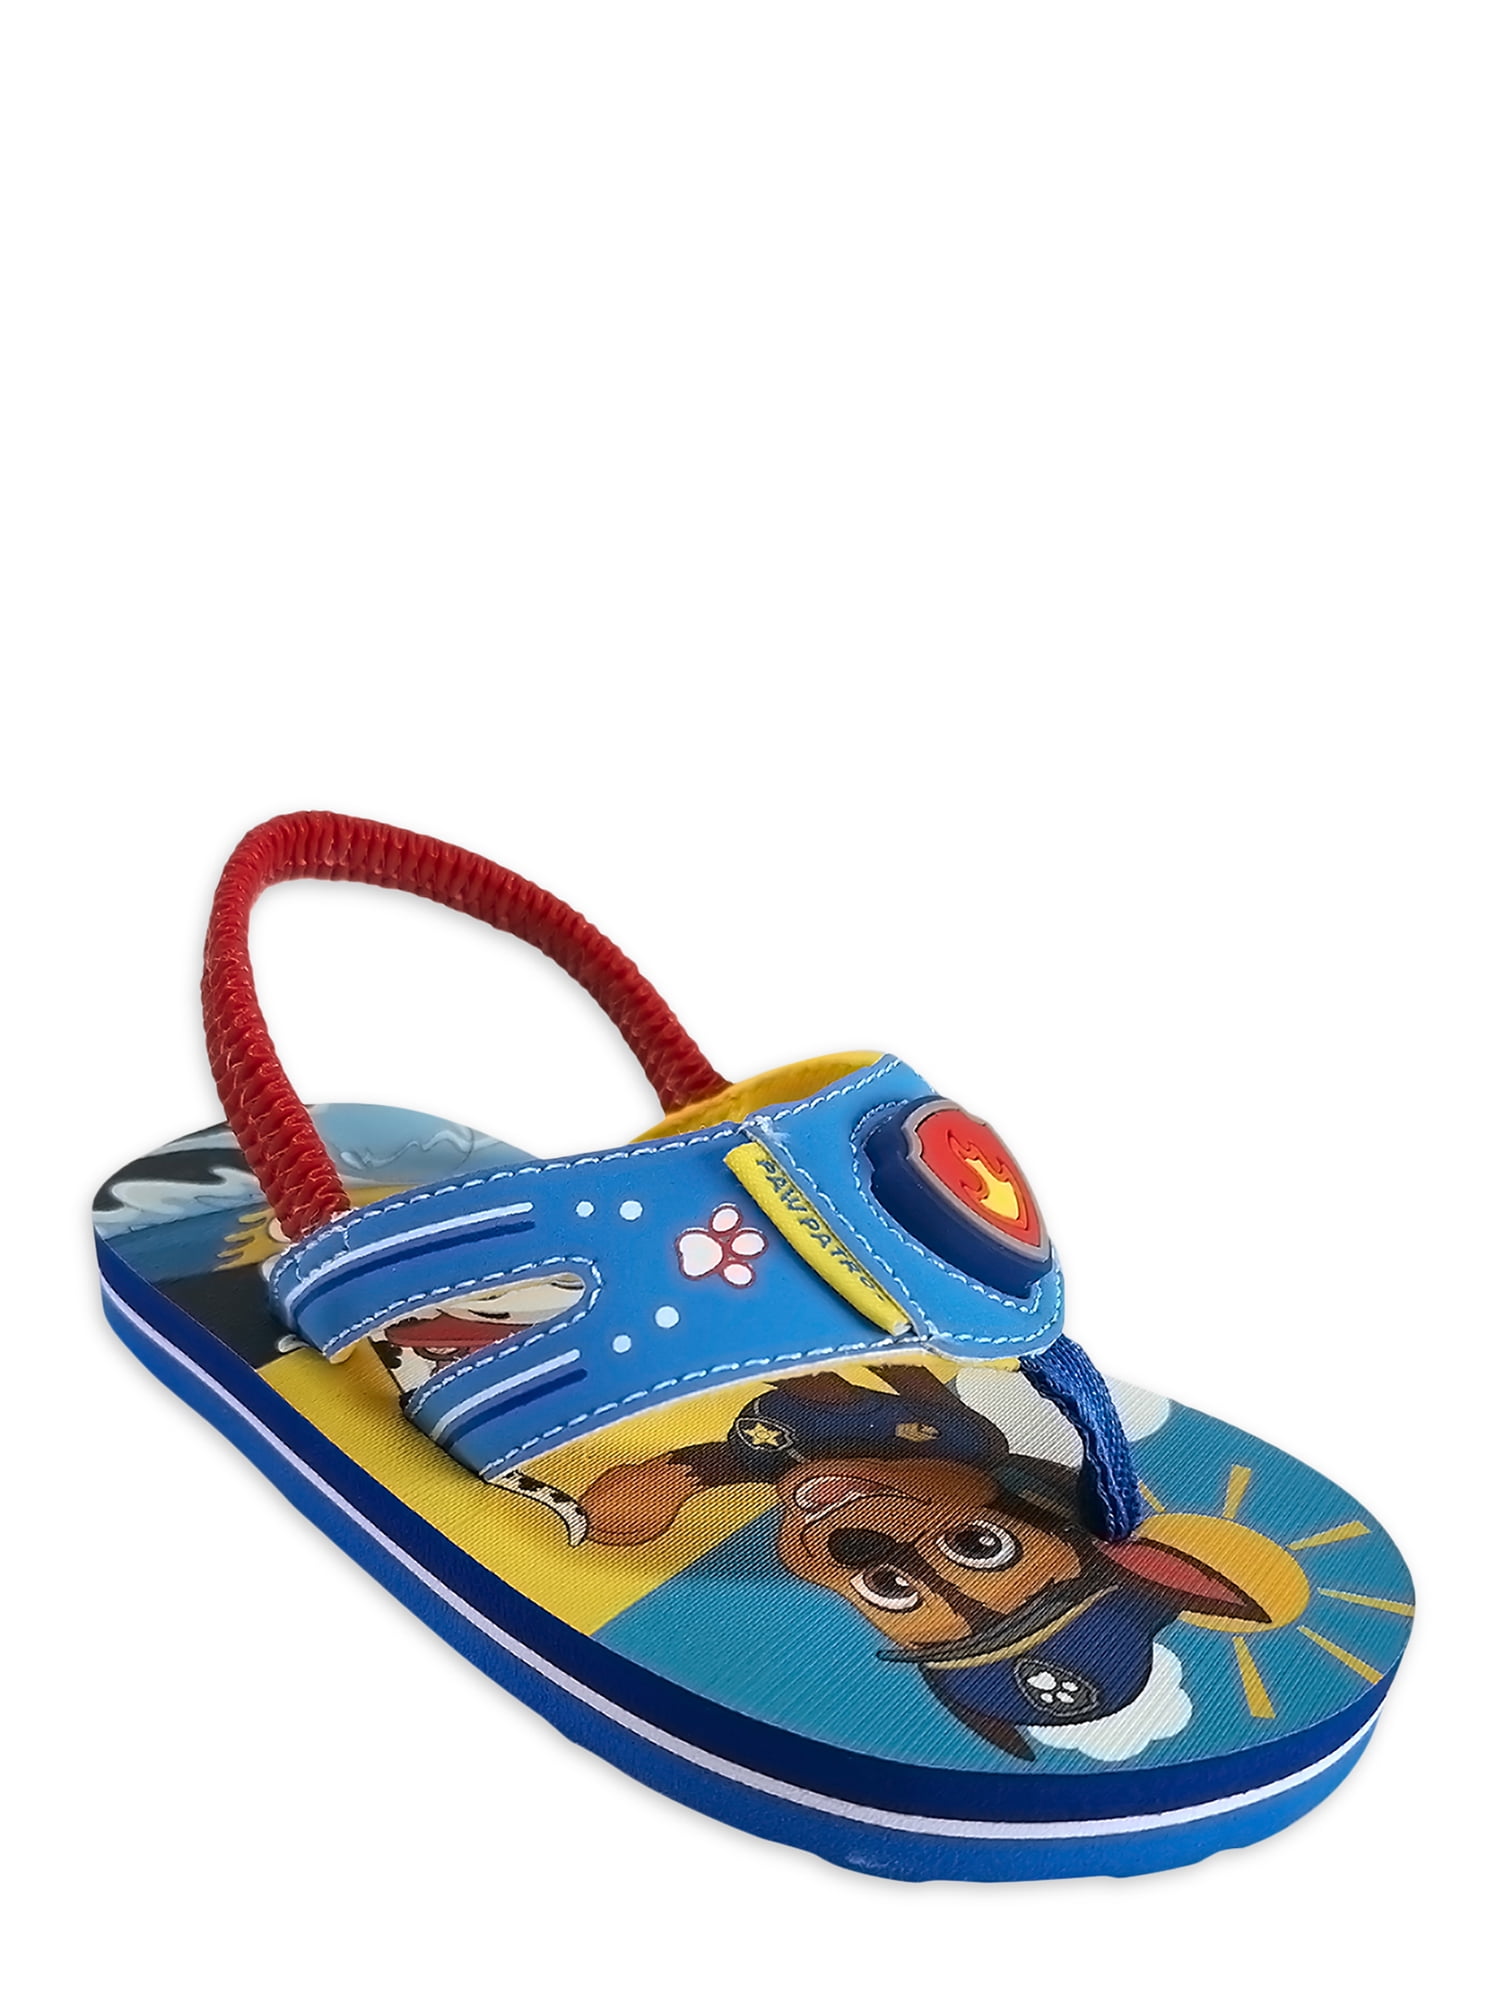 Multi-Colored size L PAW Patrol Toddler Boys Flip Flop Sandals